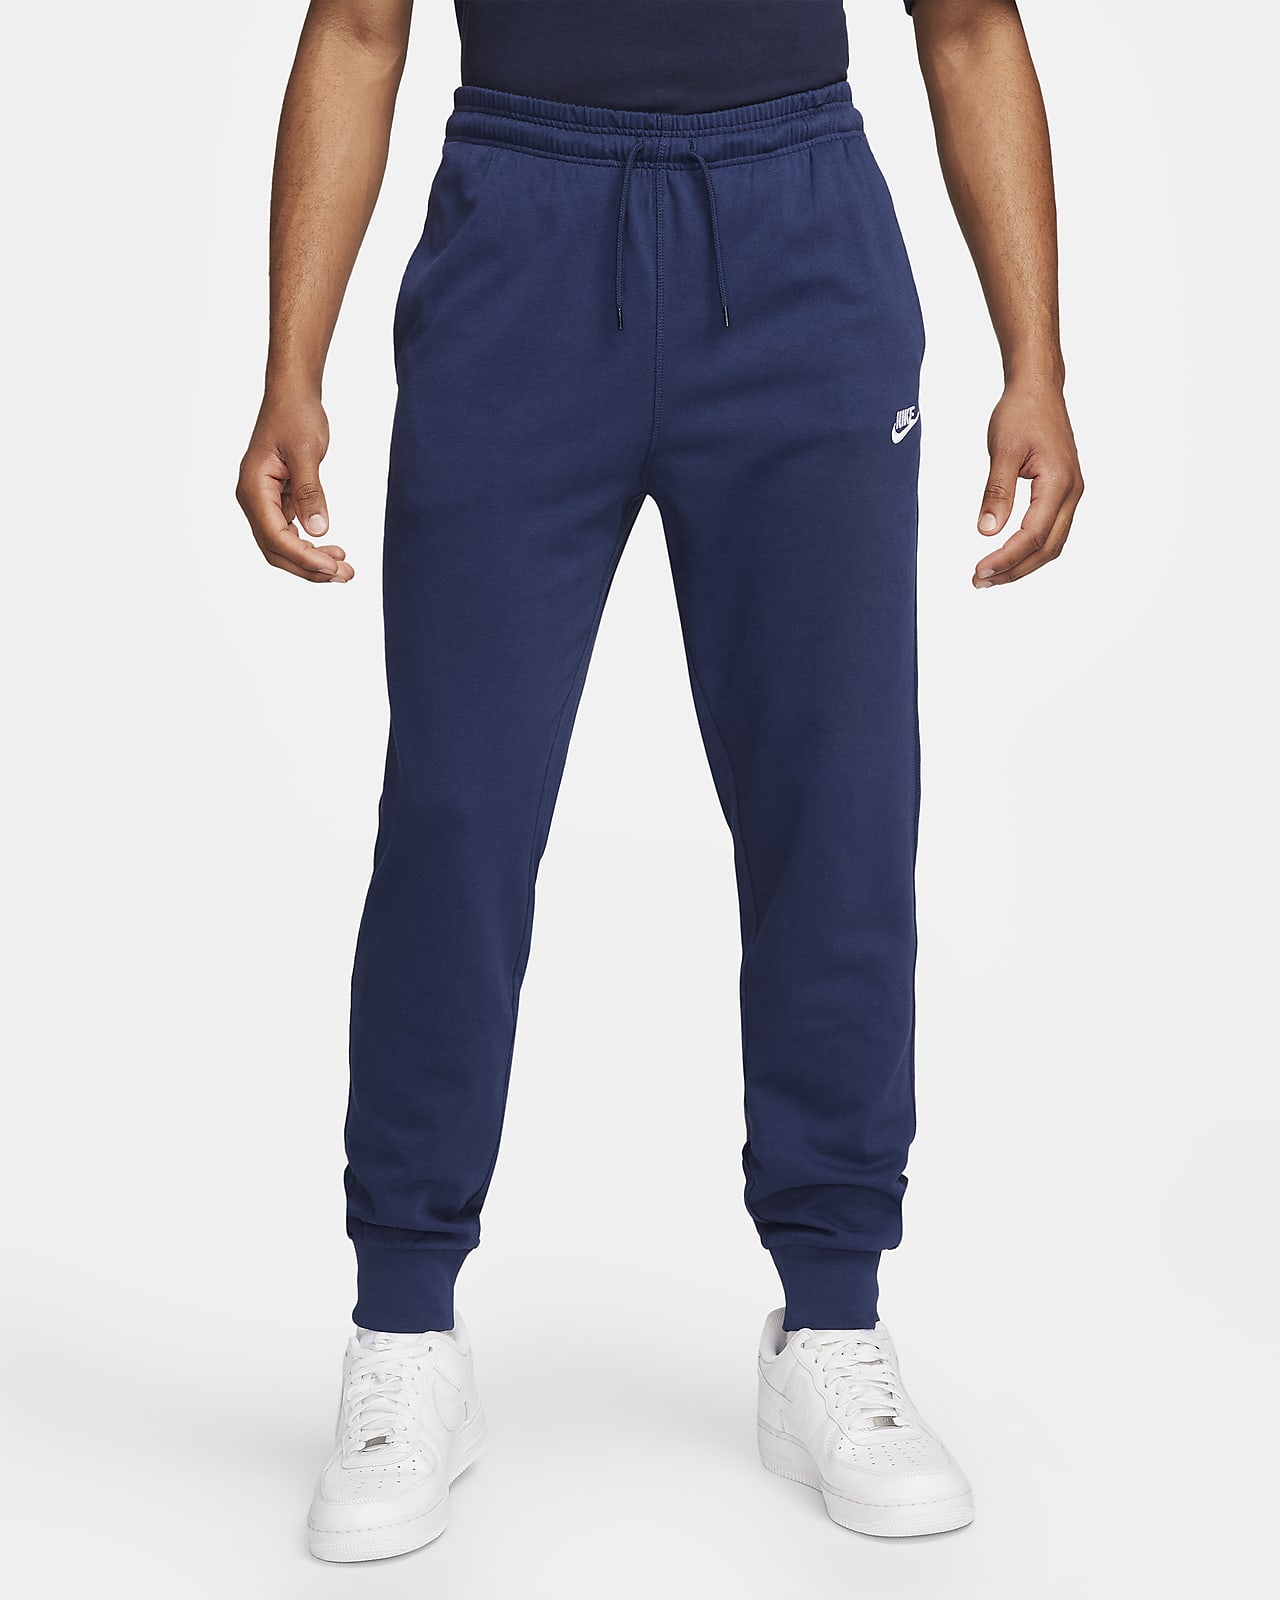 Men's Nike Sportswear Move to Zero Joggers Sweatpants Size Medium  CU4379-905